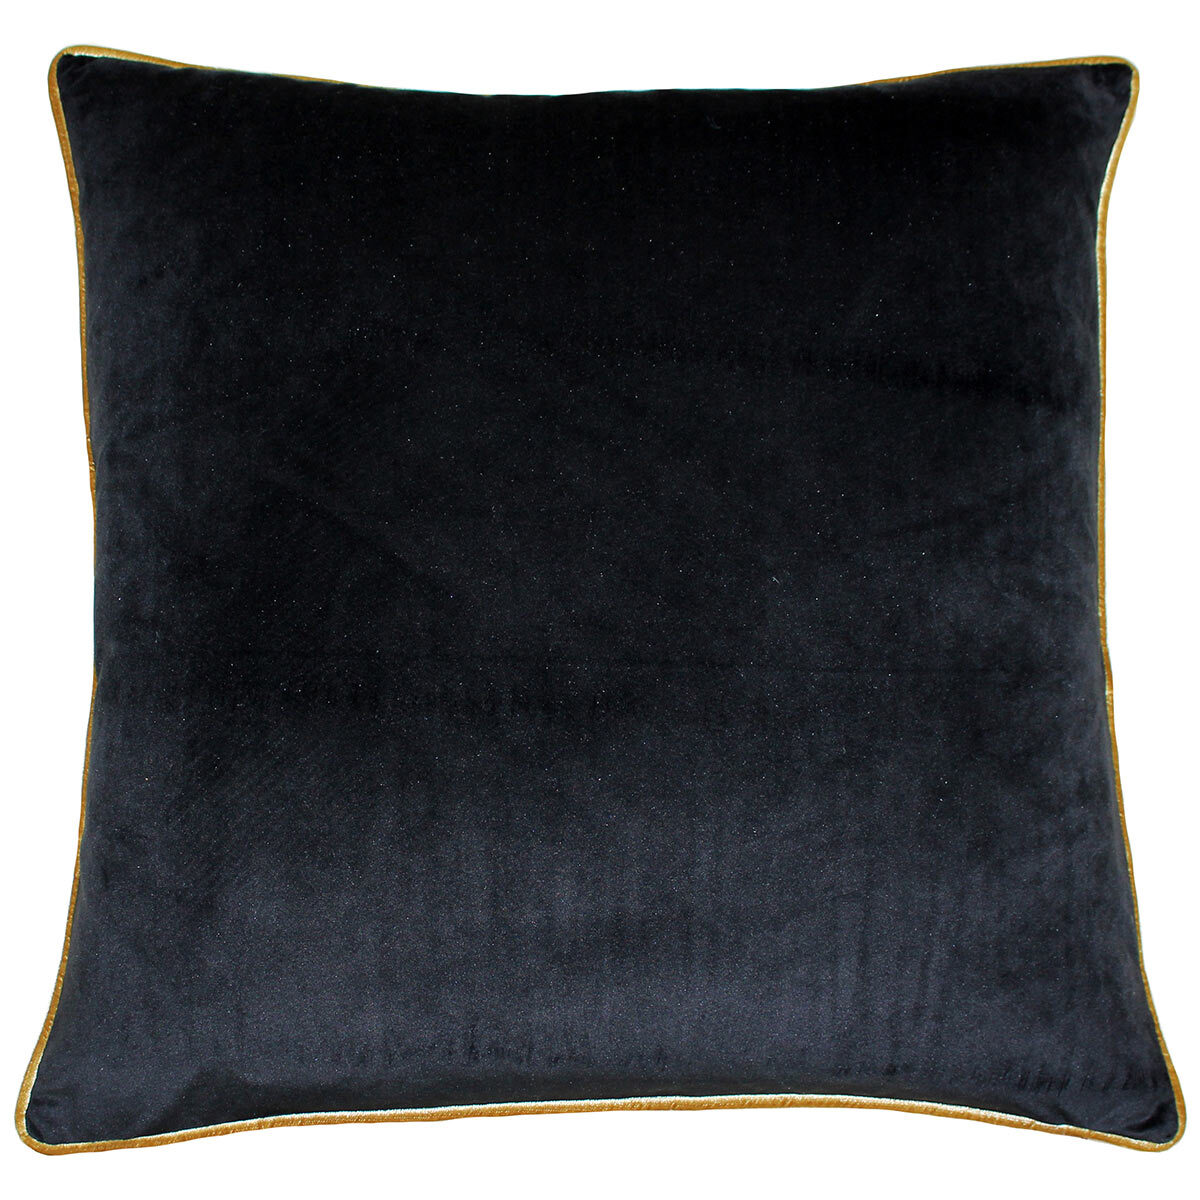 Cut out image of Gala Velvet Cushion